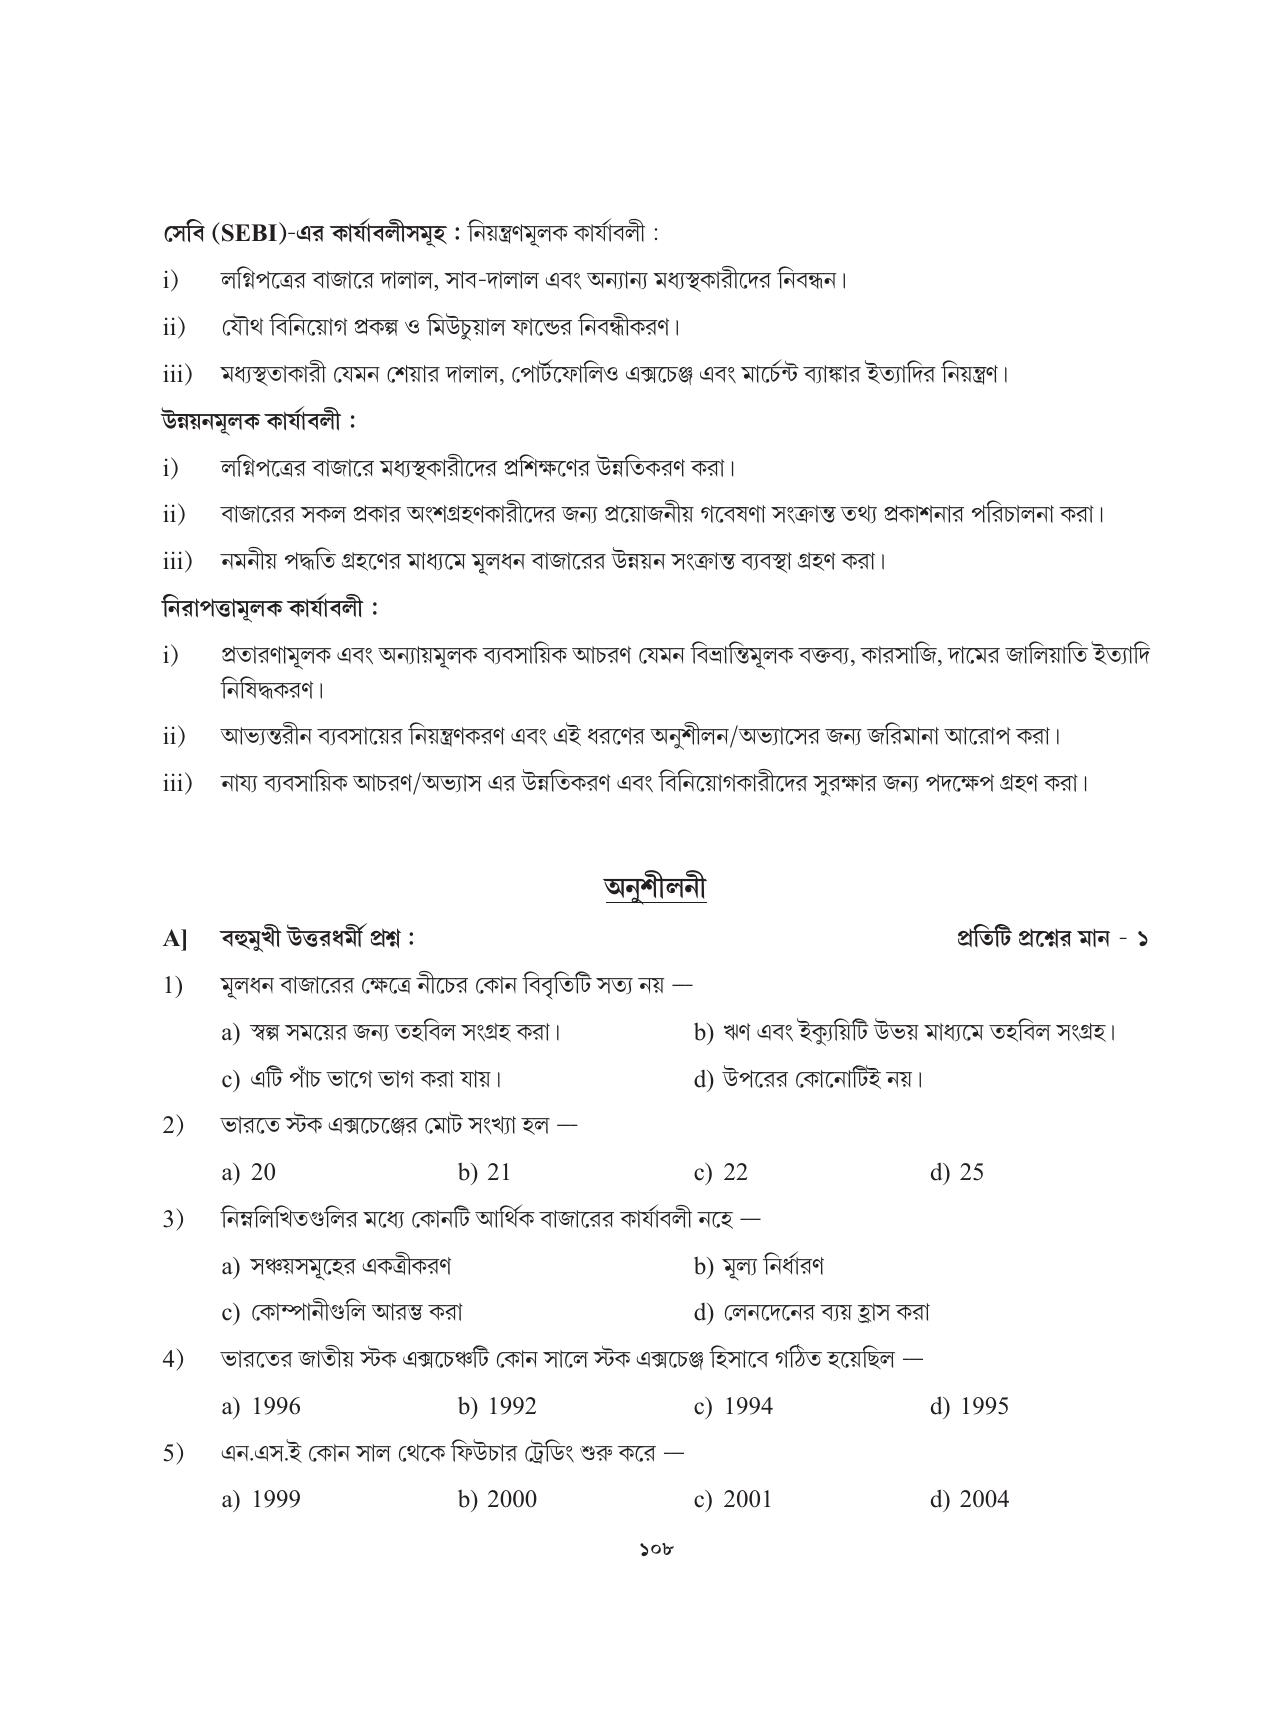 Tripura Board Class 12 Karbari Shastra Bengali Version Workbooks - Page 108